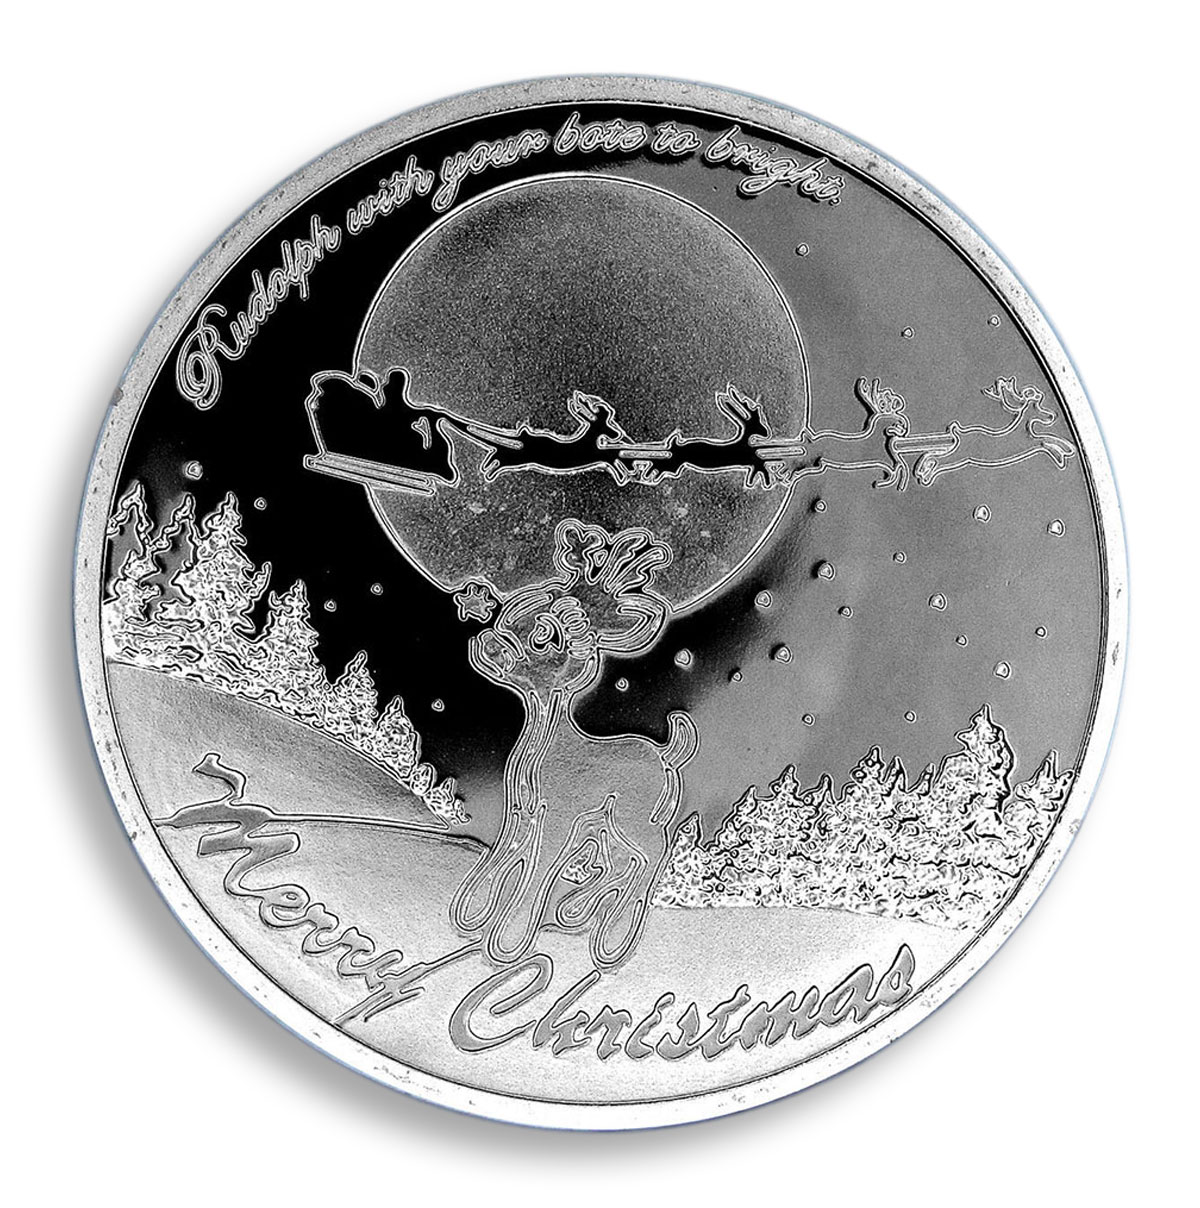 Merry Christmas, Santa Claus, Silver Plated Coin, Wishing, Lucky, Token, Medal